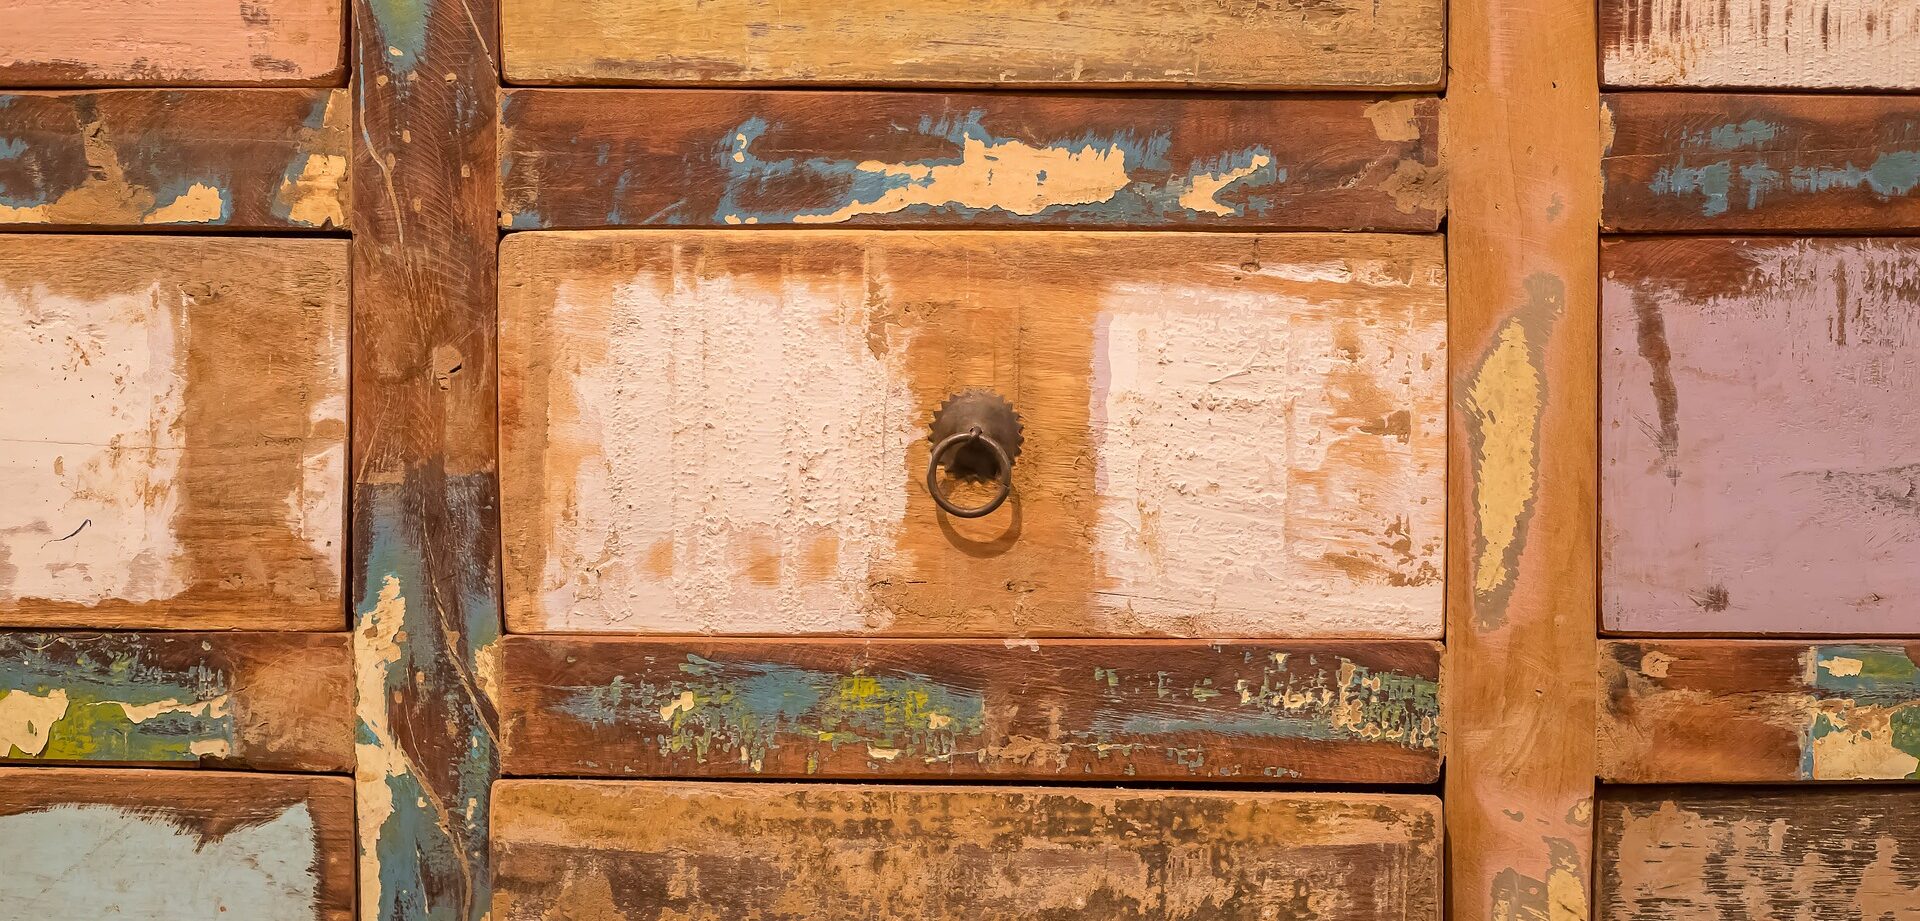 Små lådor som sitter i en antik byrå.